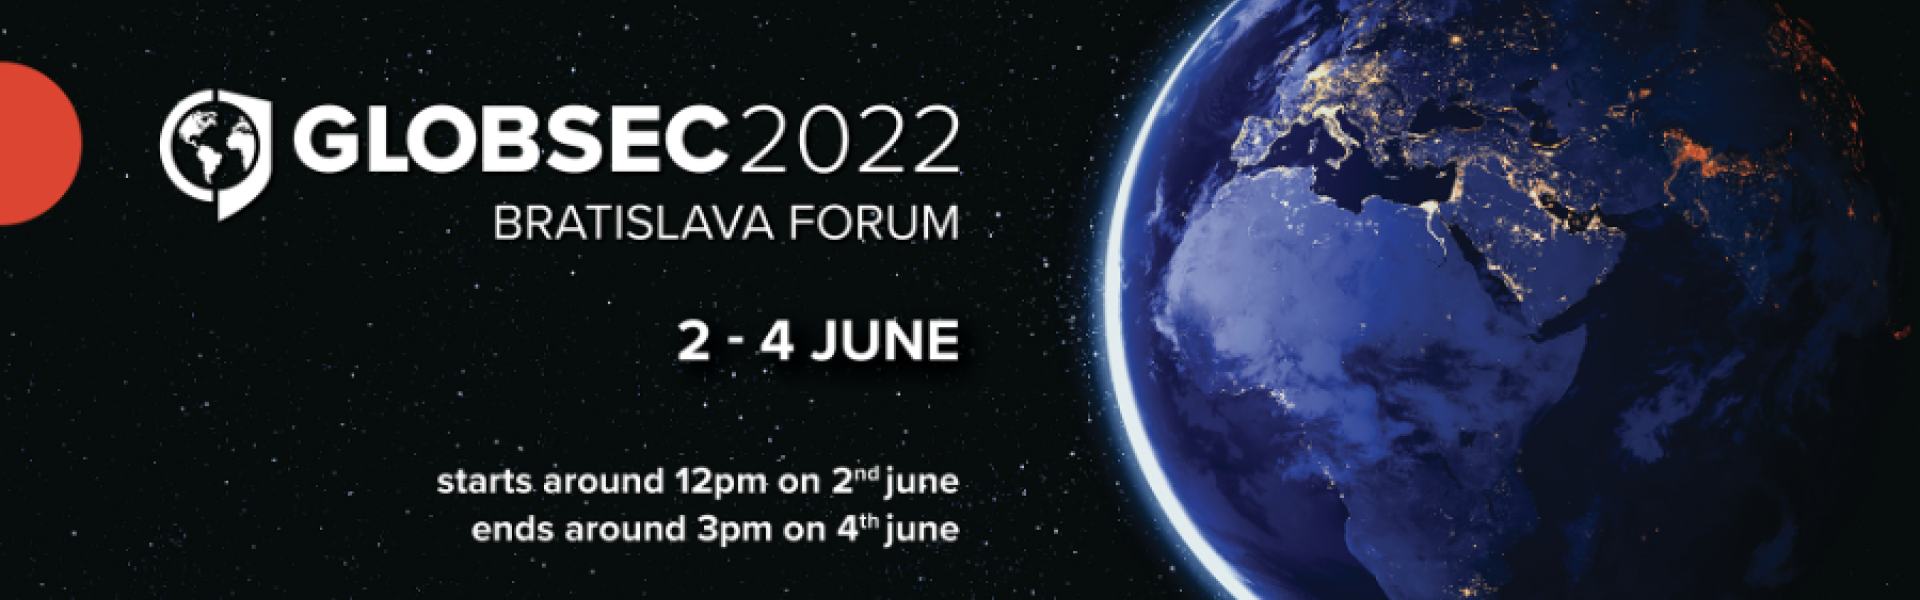 Globsec 2022 Forum banner